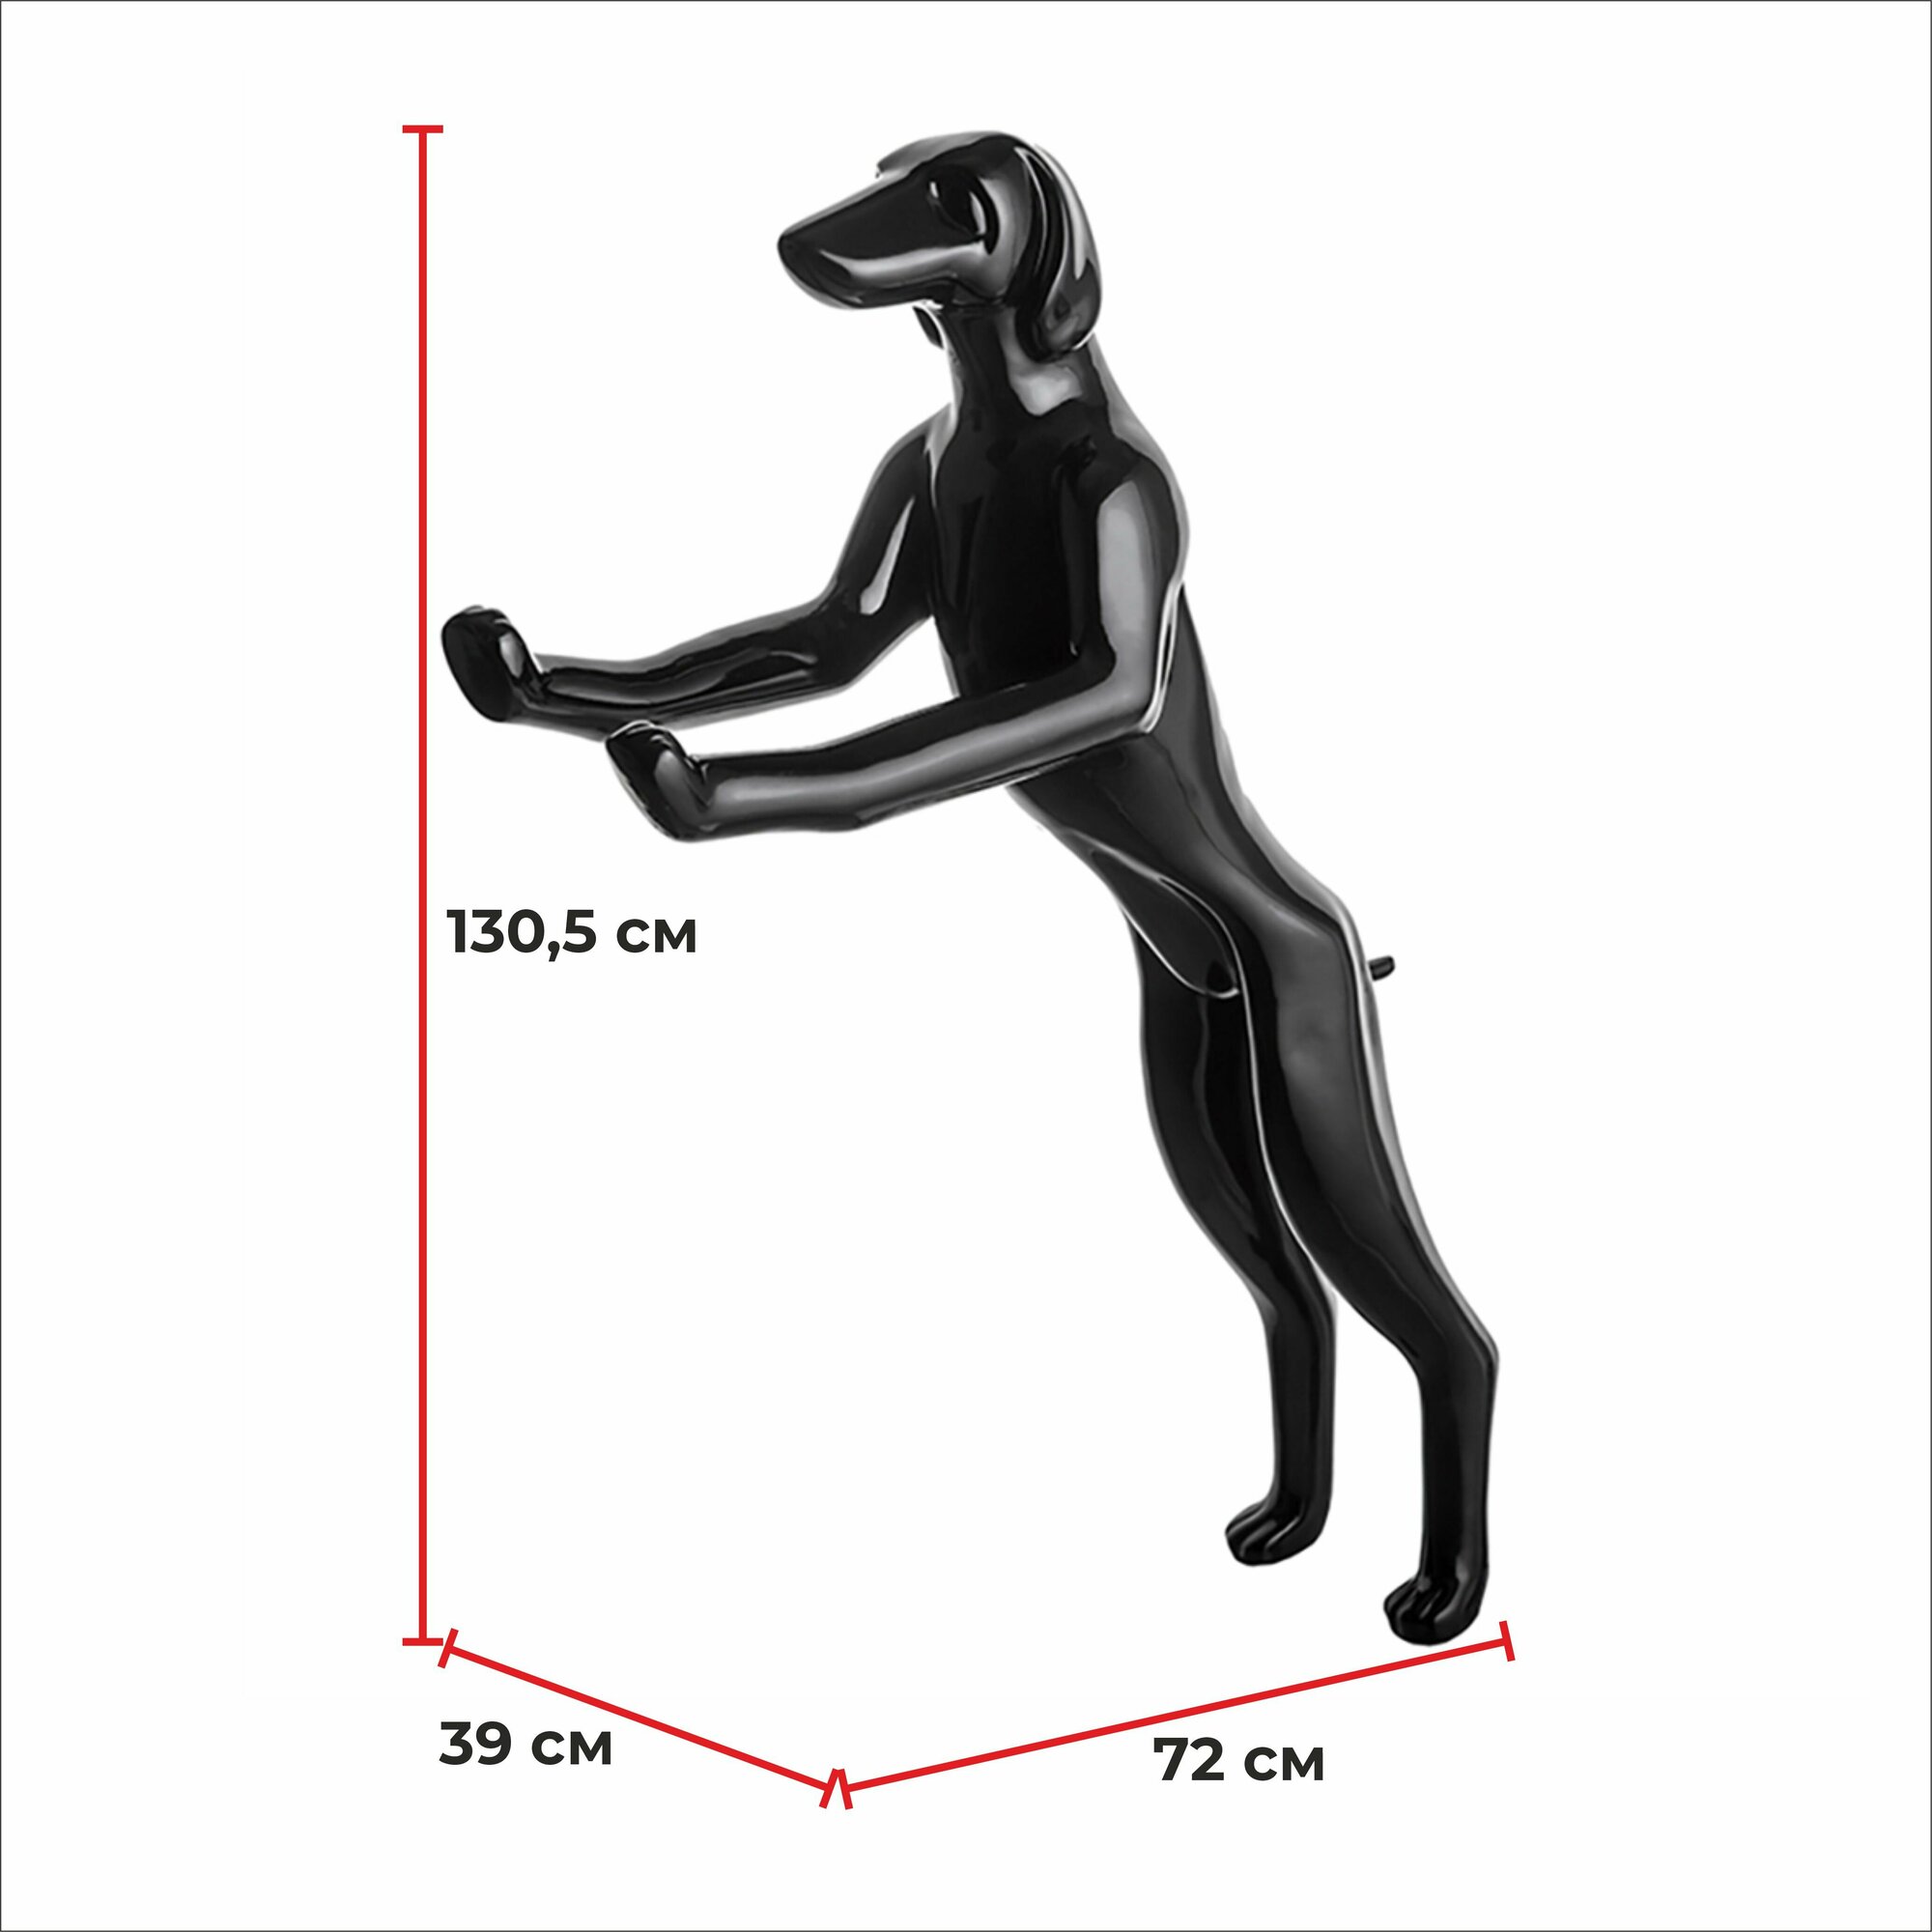 Манекен собаки AFELLOW "Курцхаар", стоящий, чёрный, 130.5х39х72см АС-КАПИТАЛ (манекены) - фото №2